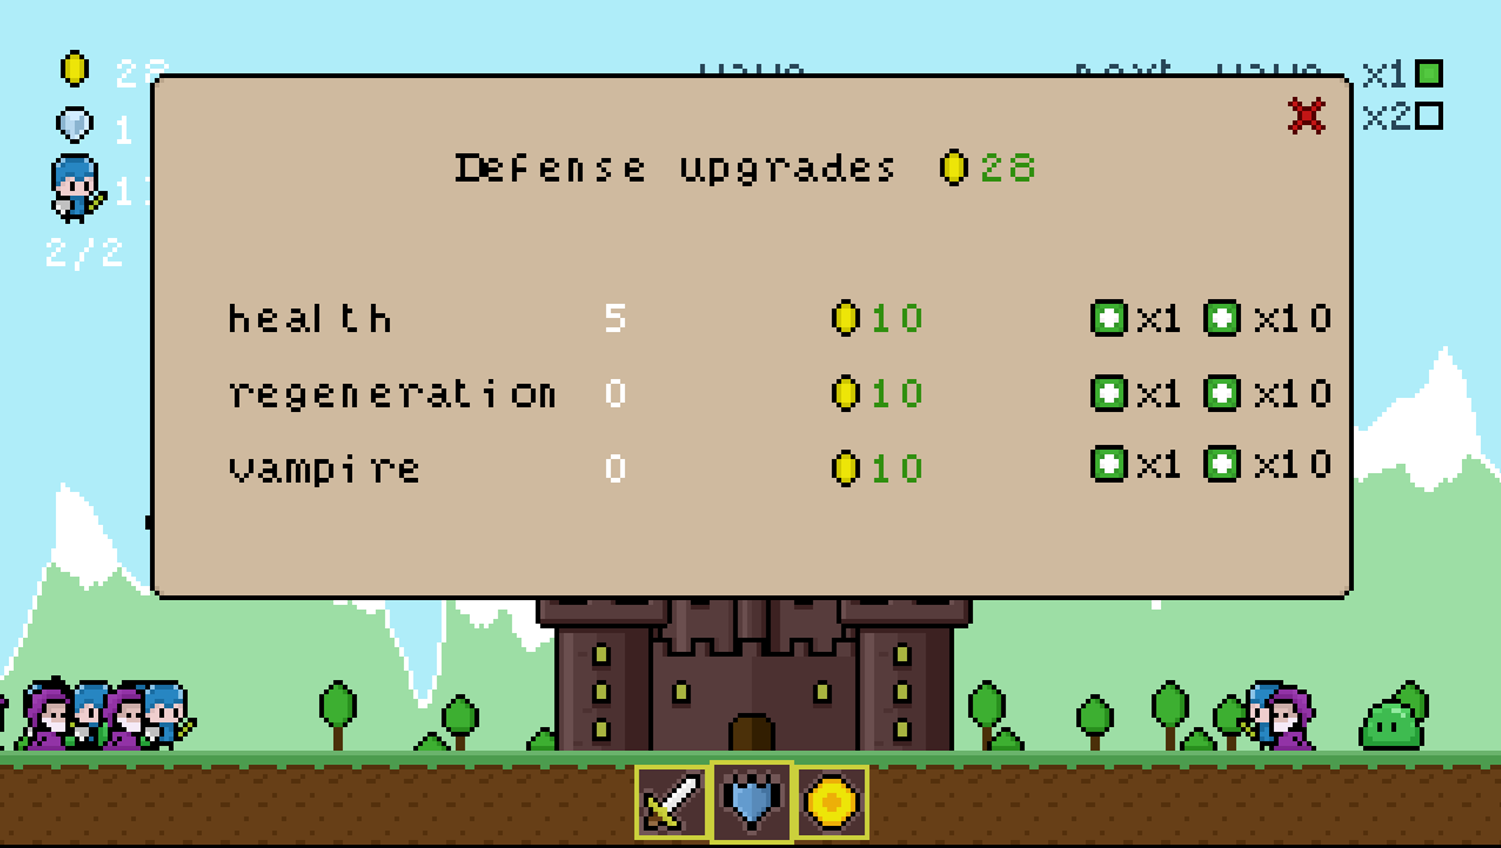 Hold Position 3 Defense Upgrades Screenshot.